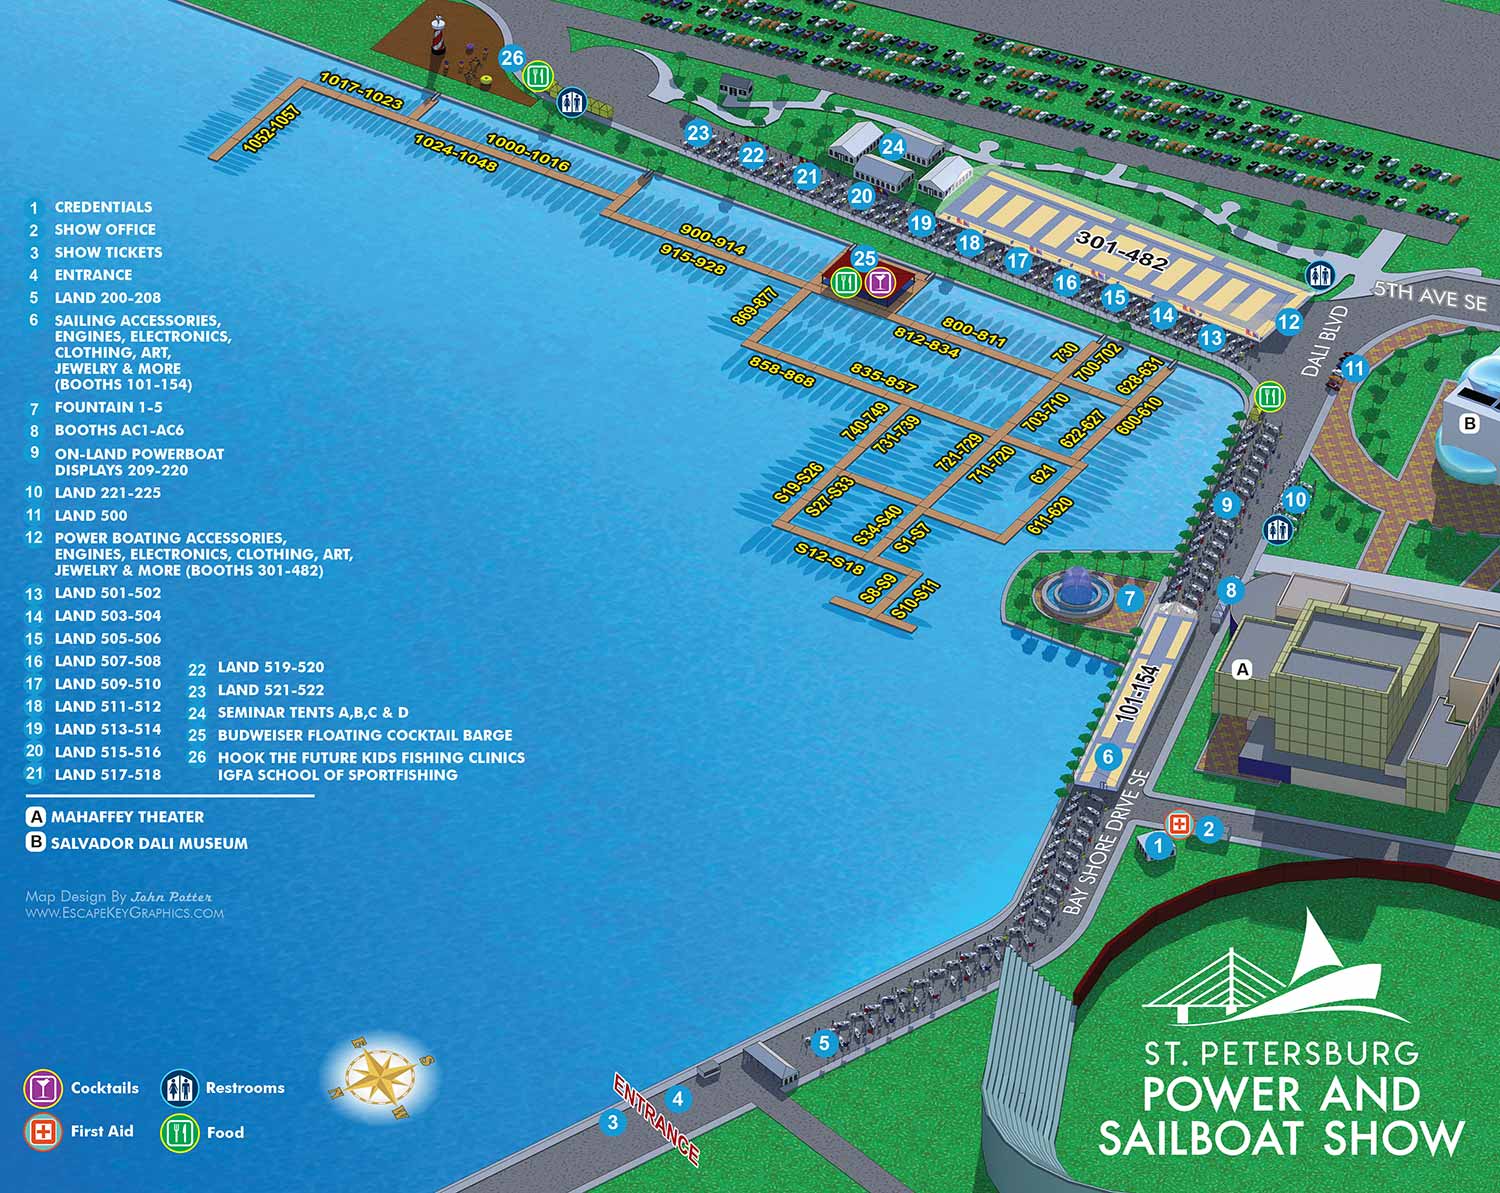 Saint Petersburg Power and Sailboat Show Map 2017